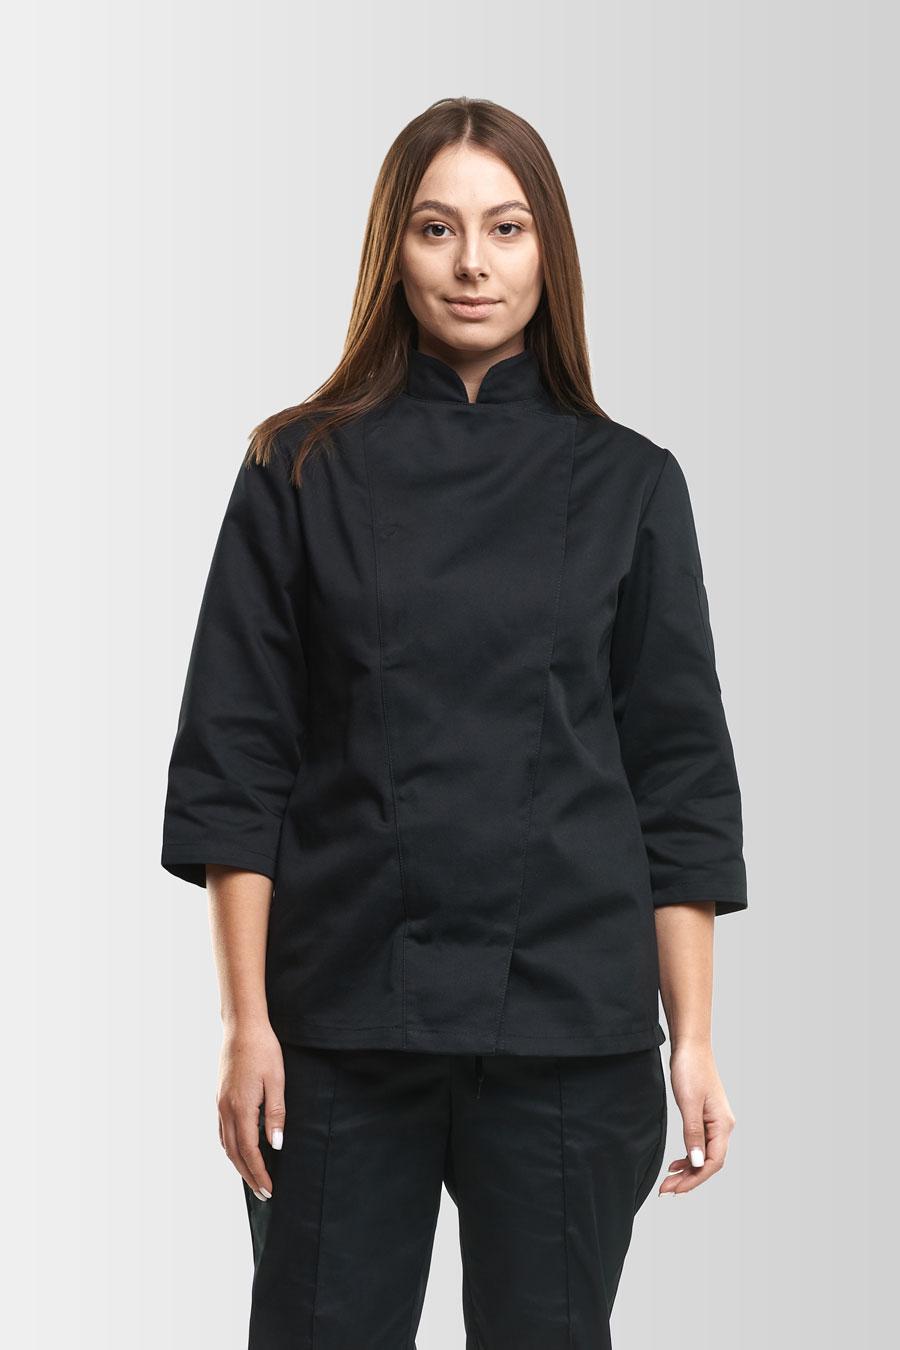 Китель кухаря жіночий Vsetex Rio 235-1 S Чорний (VT920)